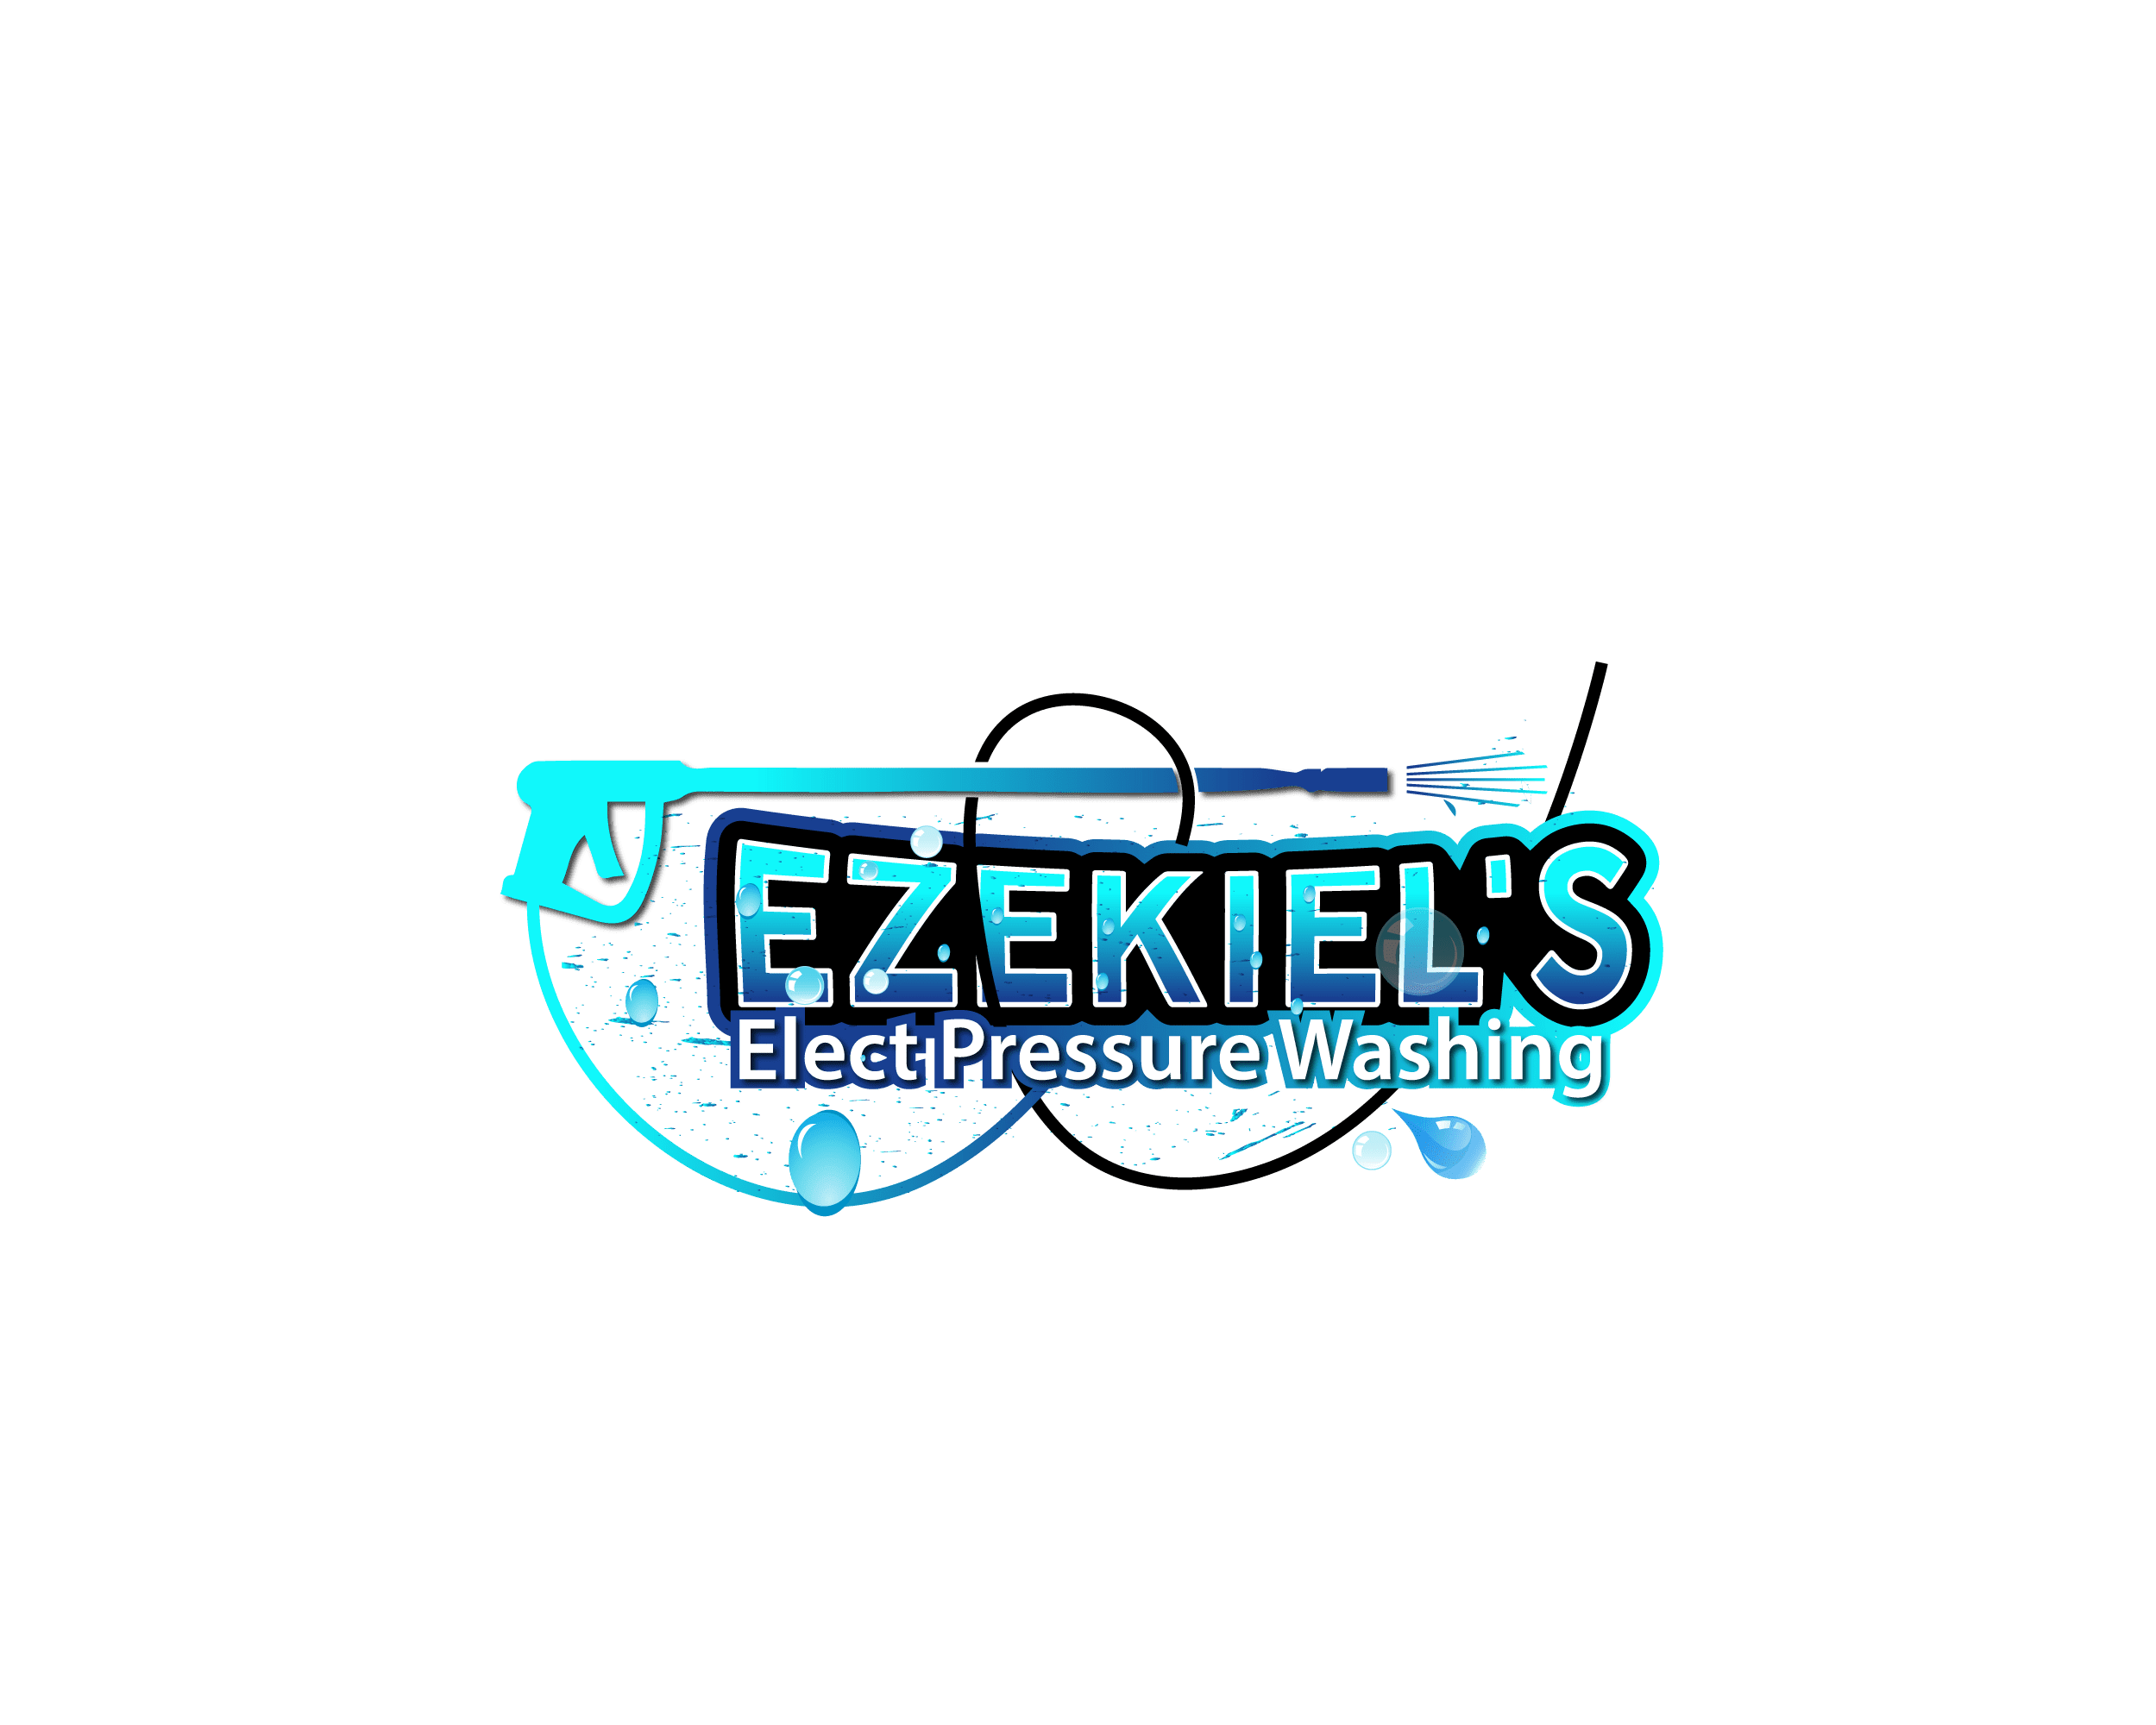 Ezekiel's Elect Pressure Washing